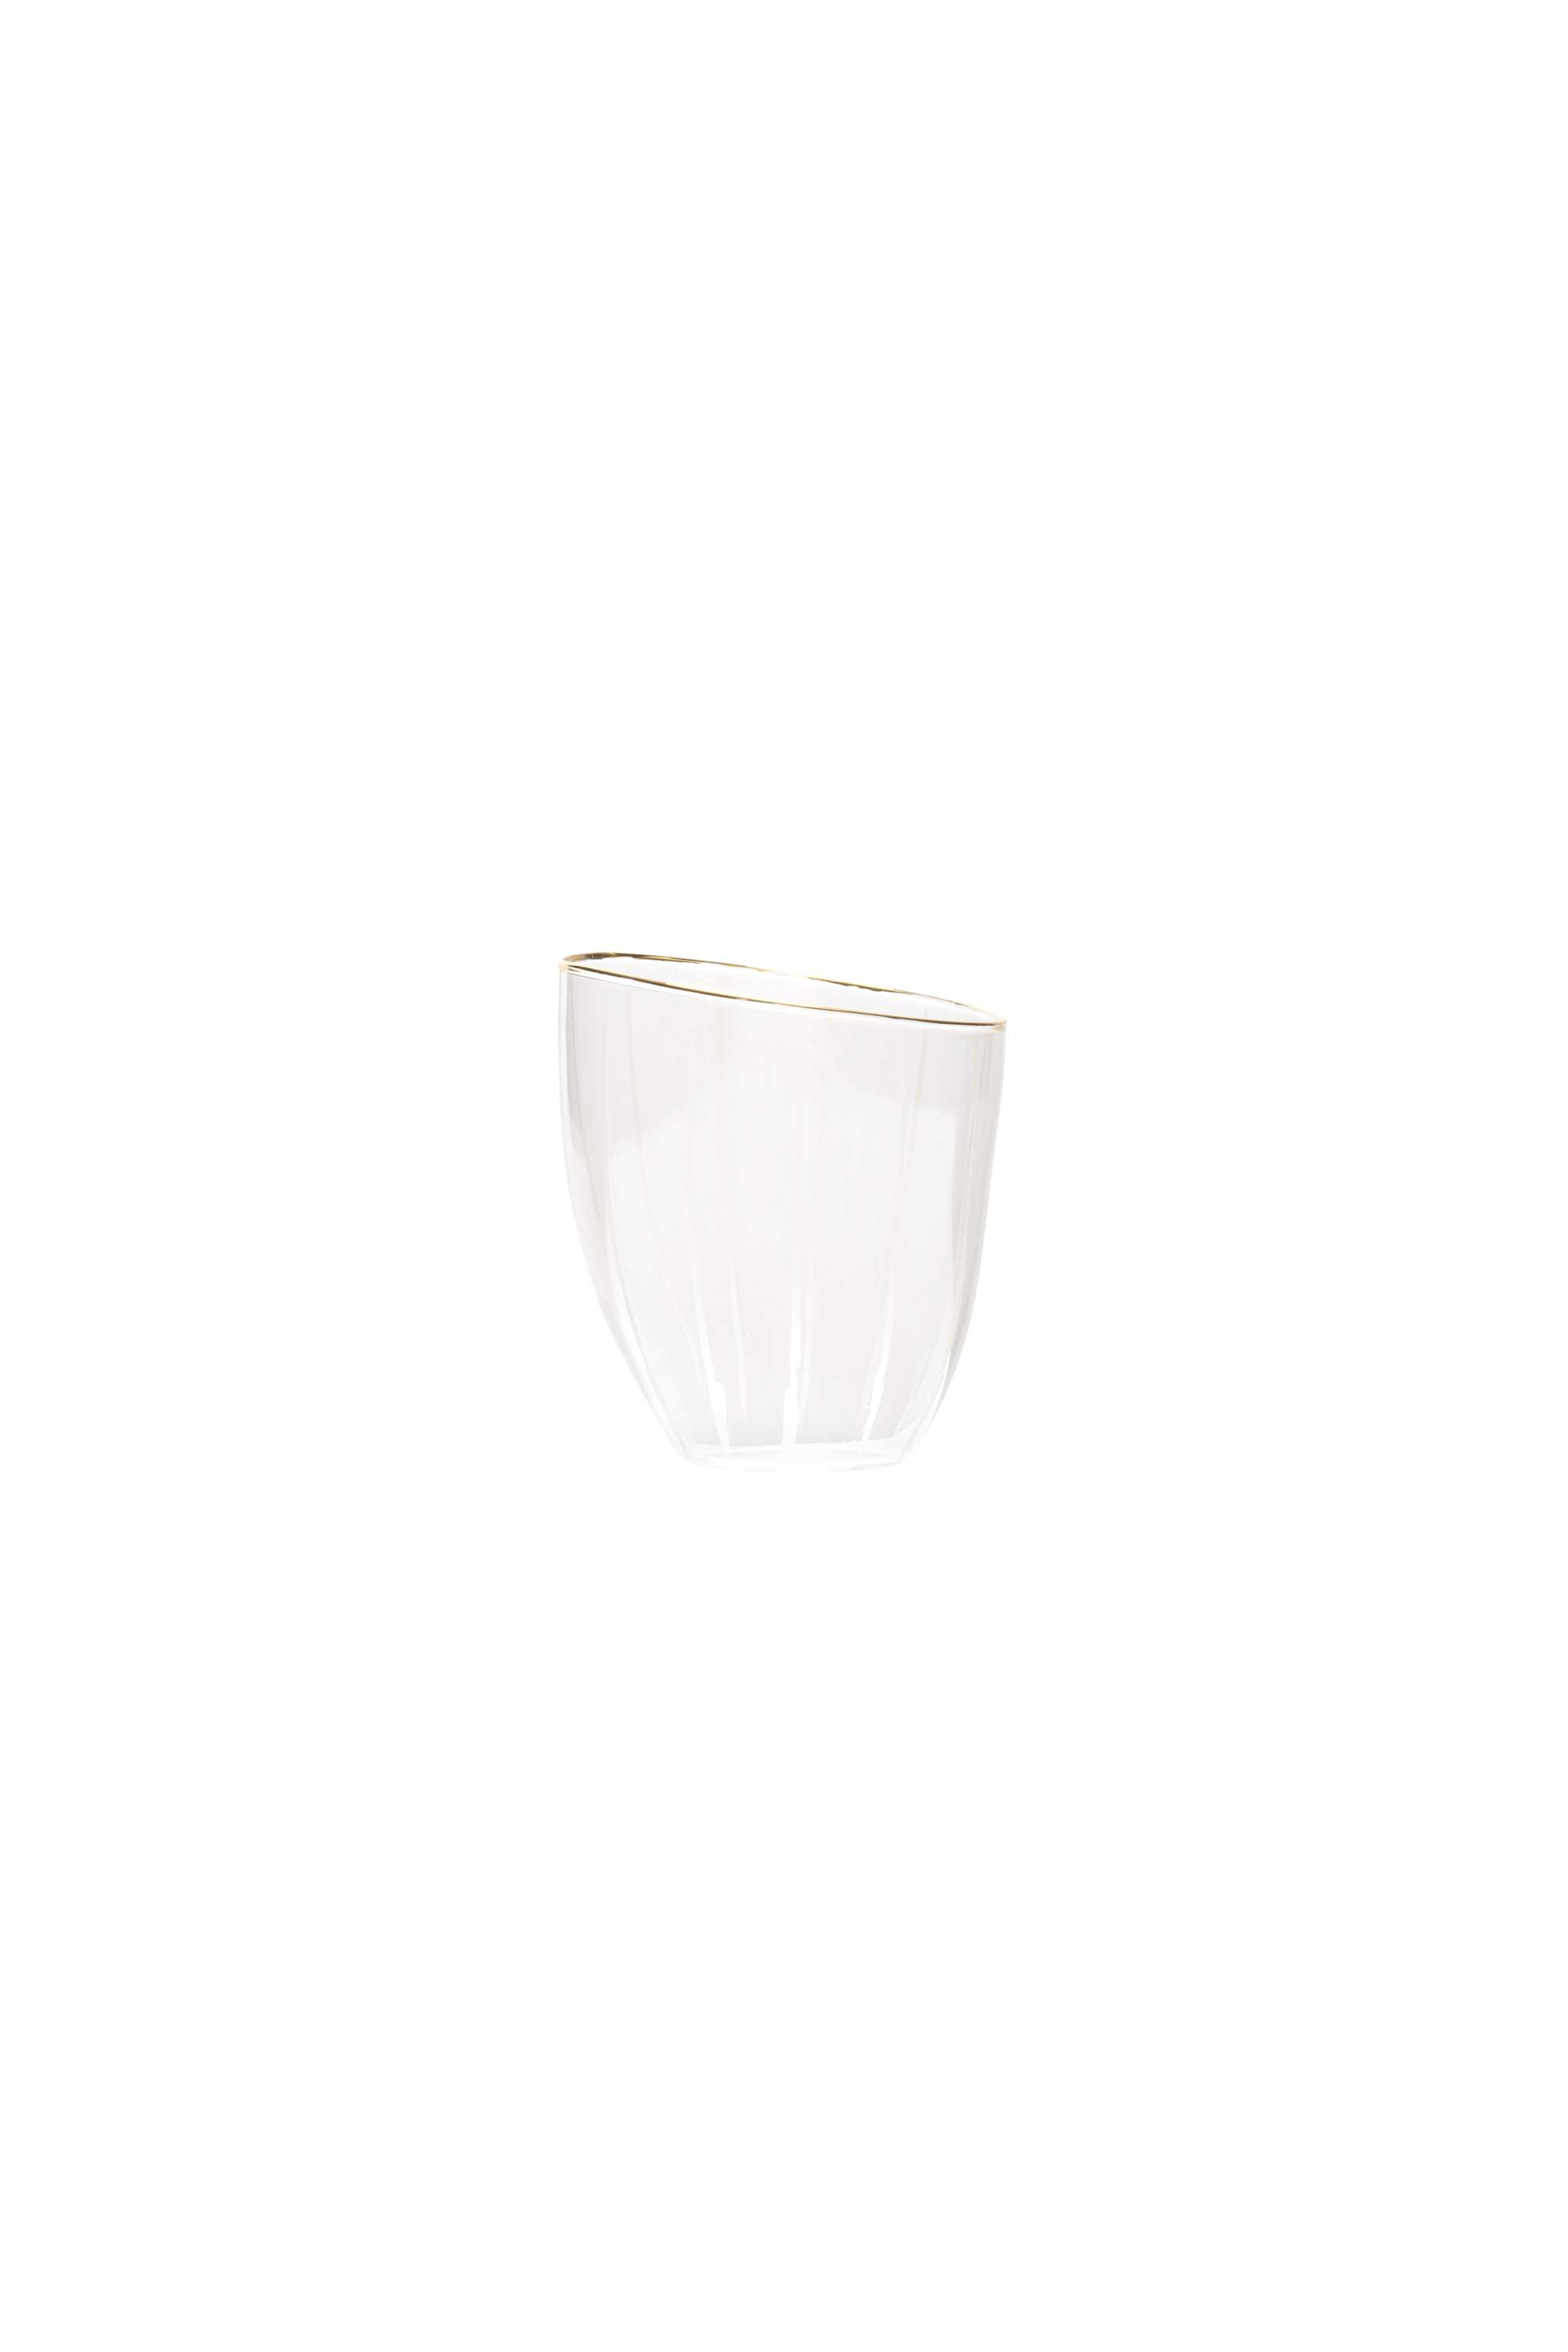 Diesel - 11243 GLASSES "CLASSIC ON ACID - CORDIAL, Unisex Vaso de cristal in Blanco - Image 1